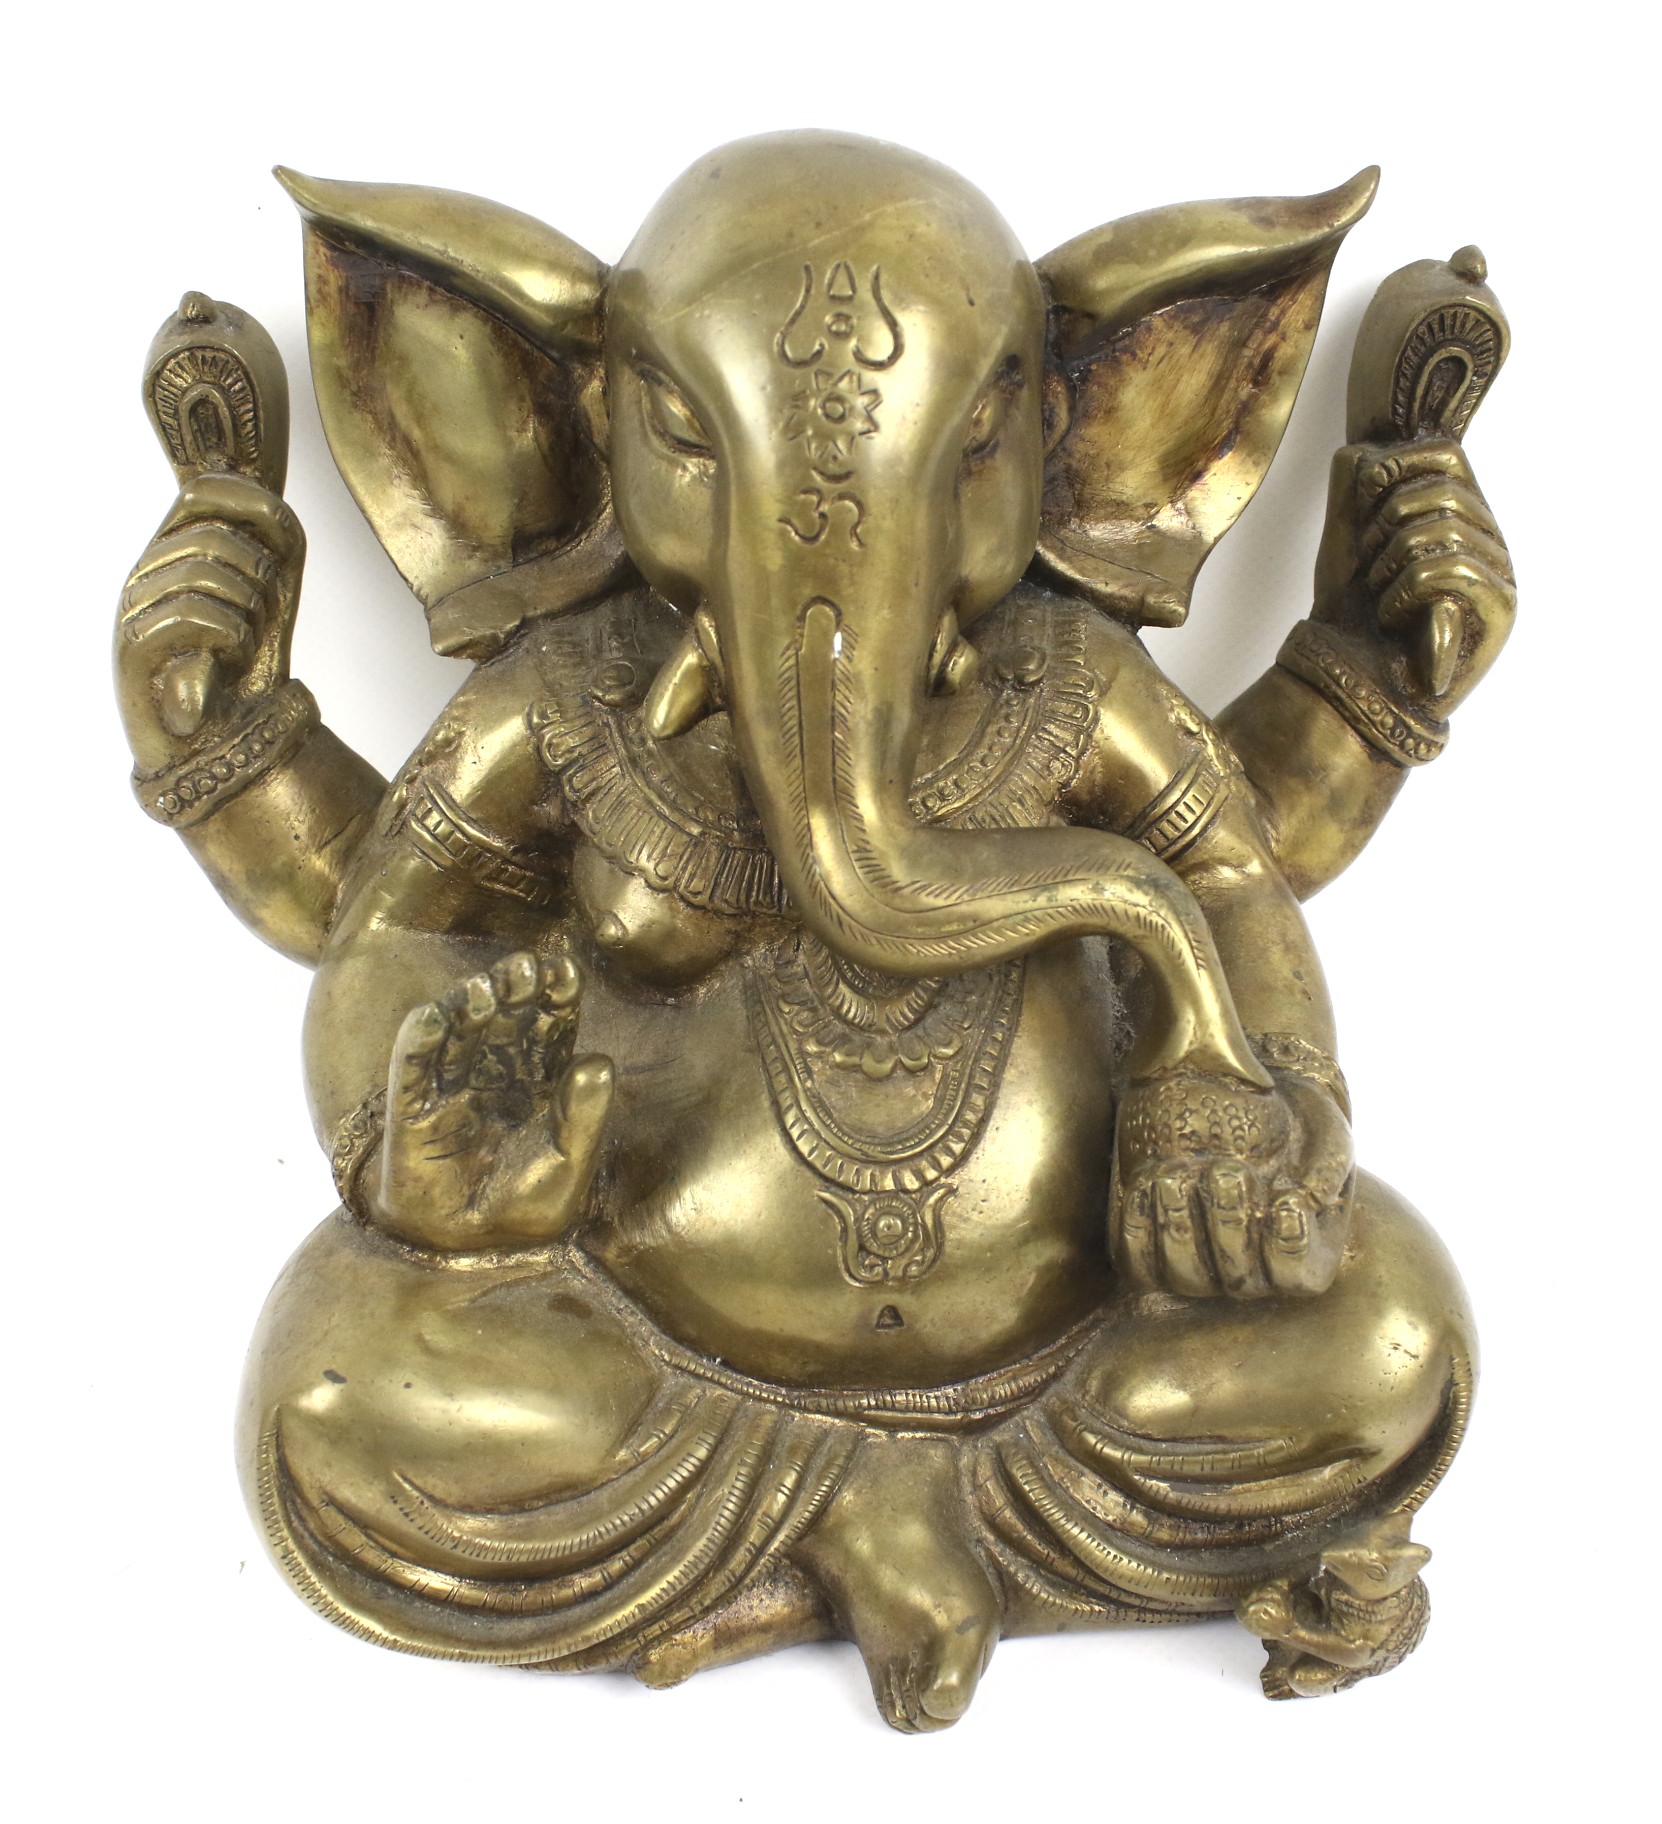 A cast brass sculpture of the Hindu elephant-headed God Ganesha.